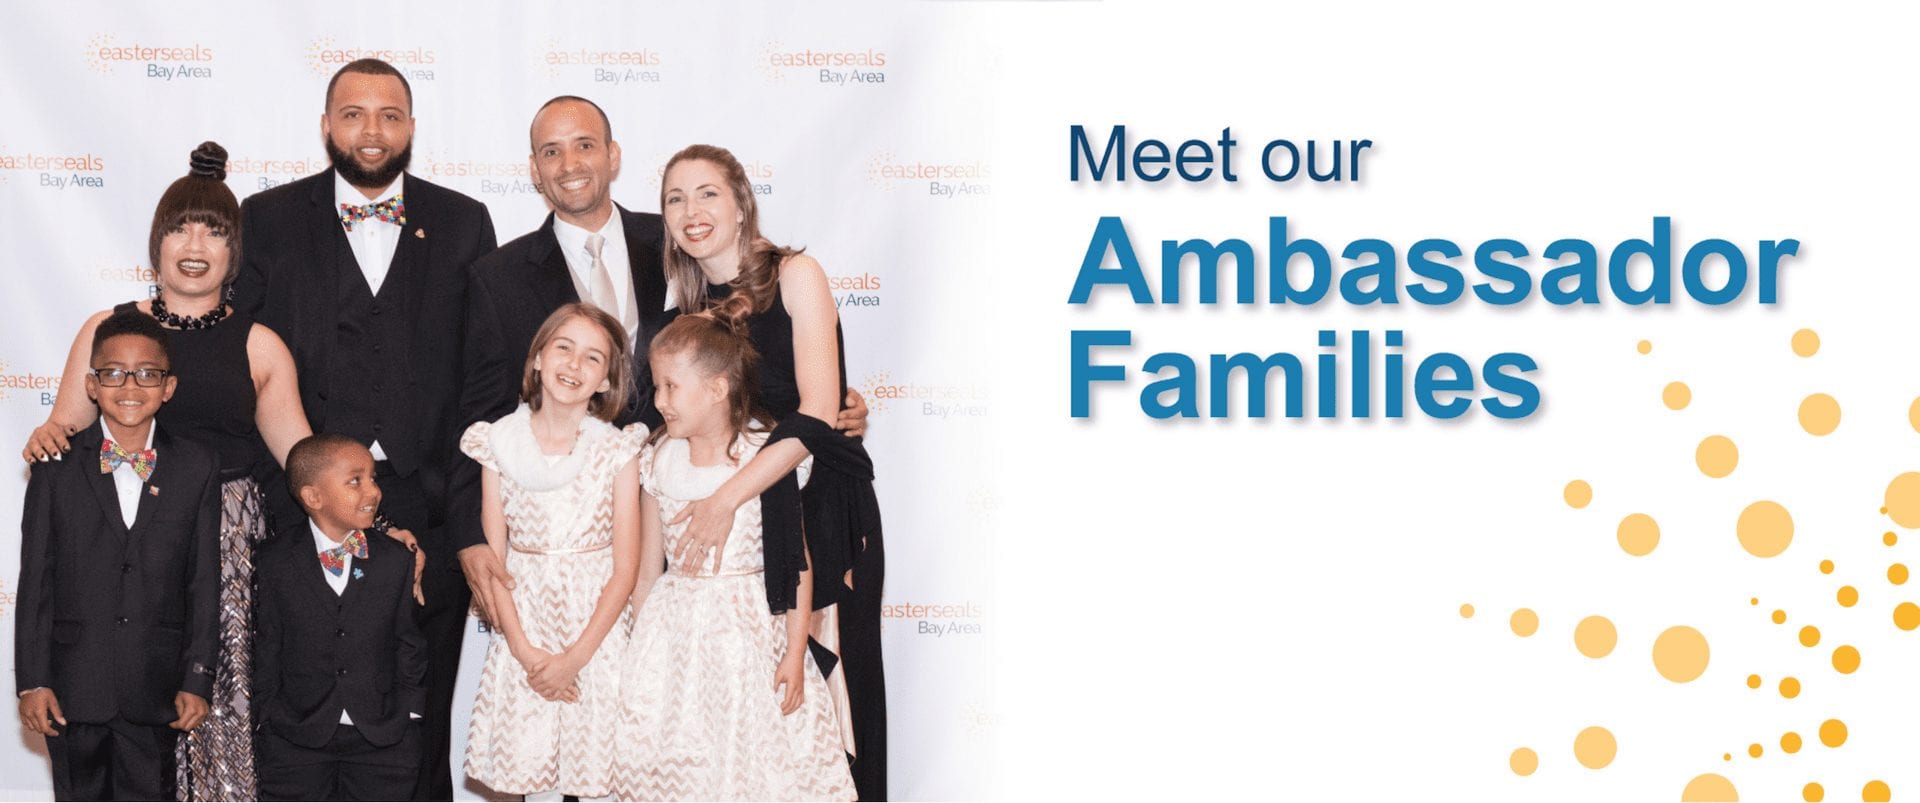 two ESNorCal ambassador families posing next to the text "meet our ambassador families"